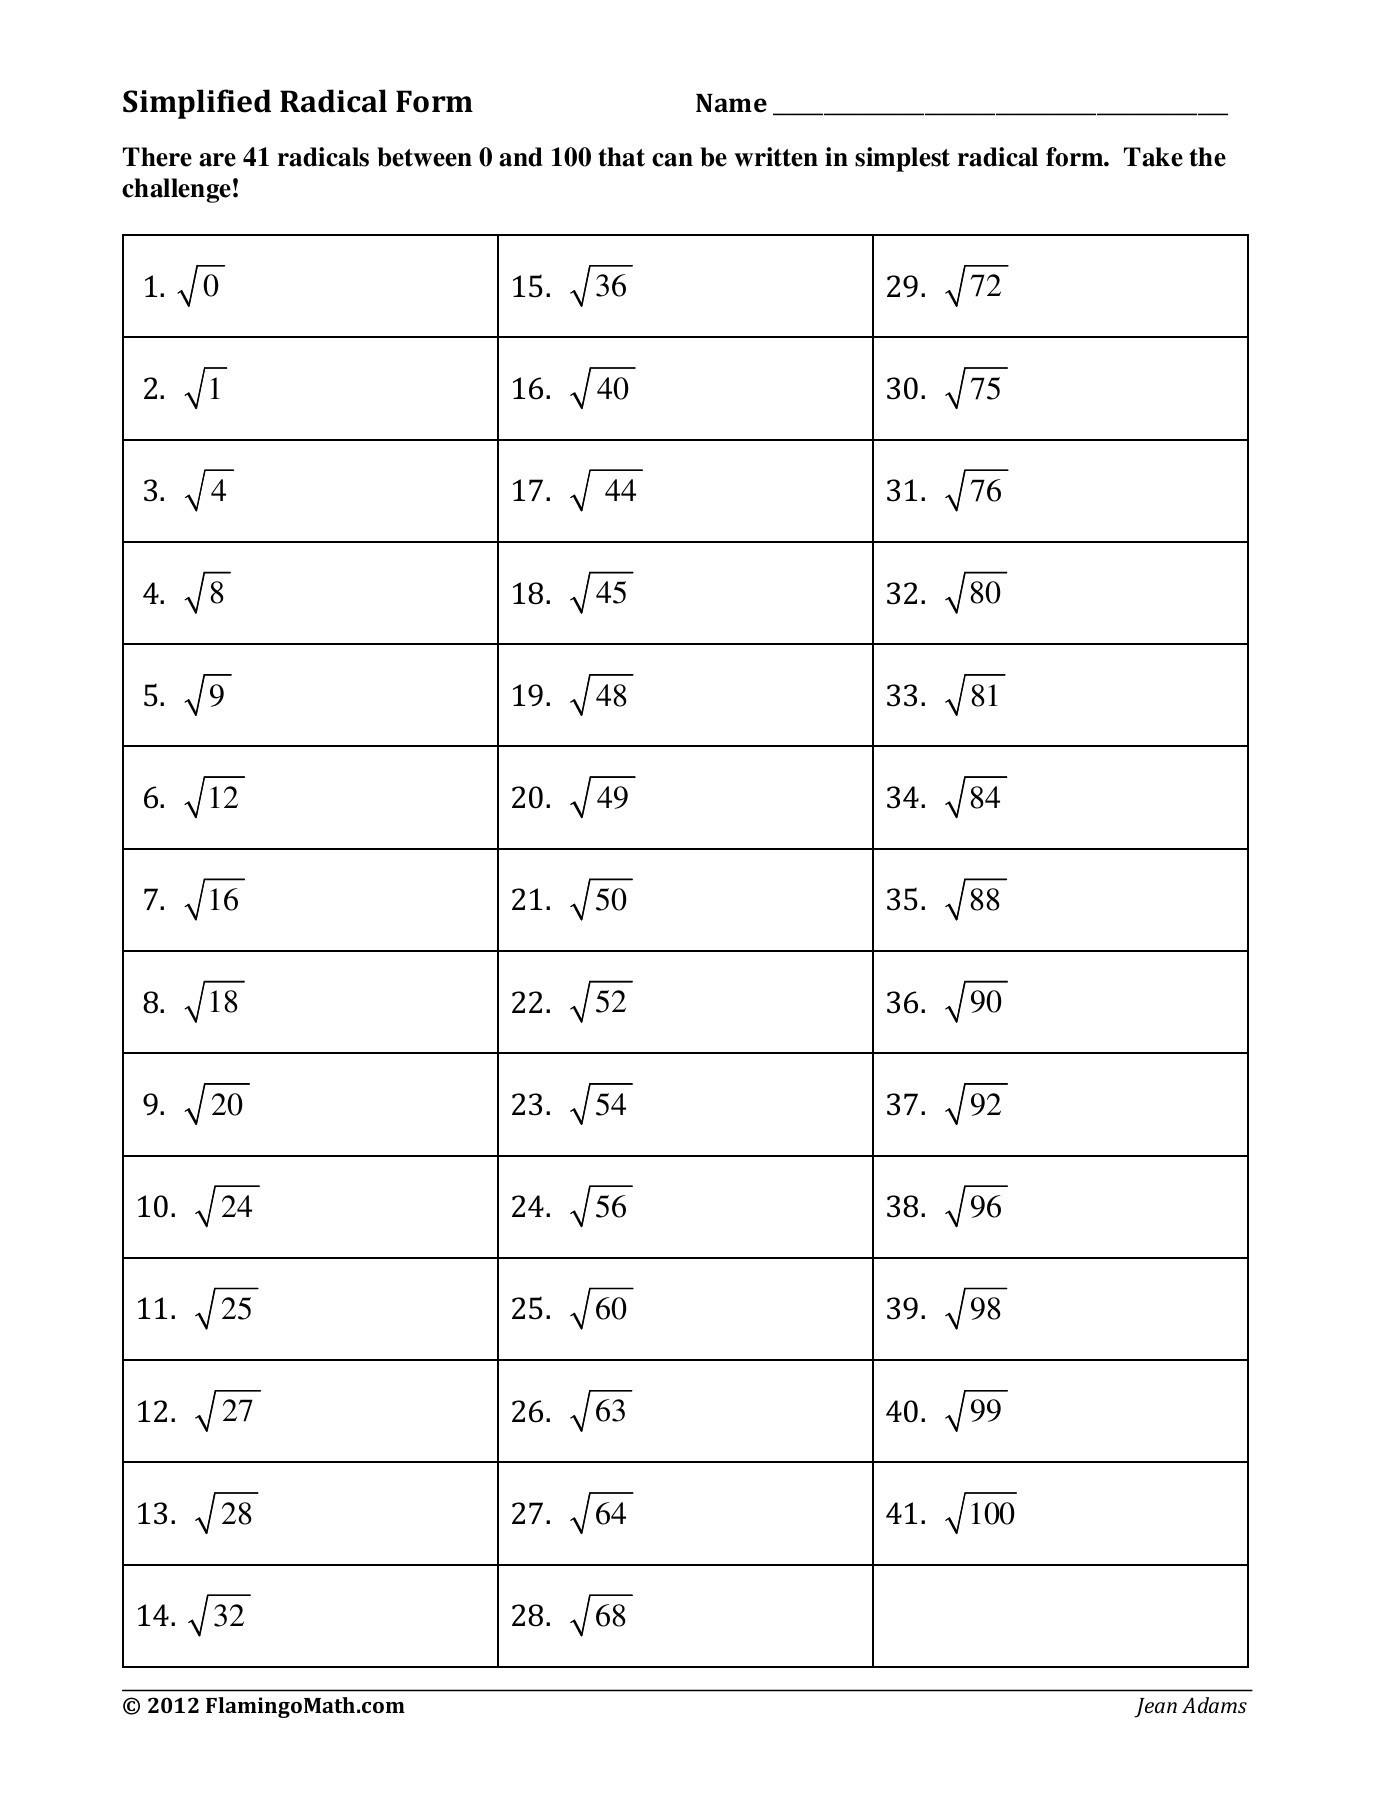 Simplifying Radicals Worksheet 1 Simplified Radical form High School Math Help Pages 1 3